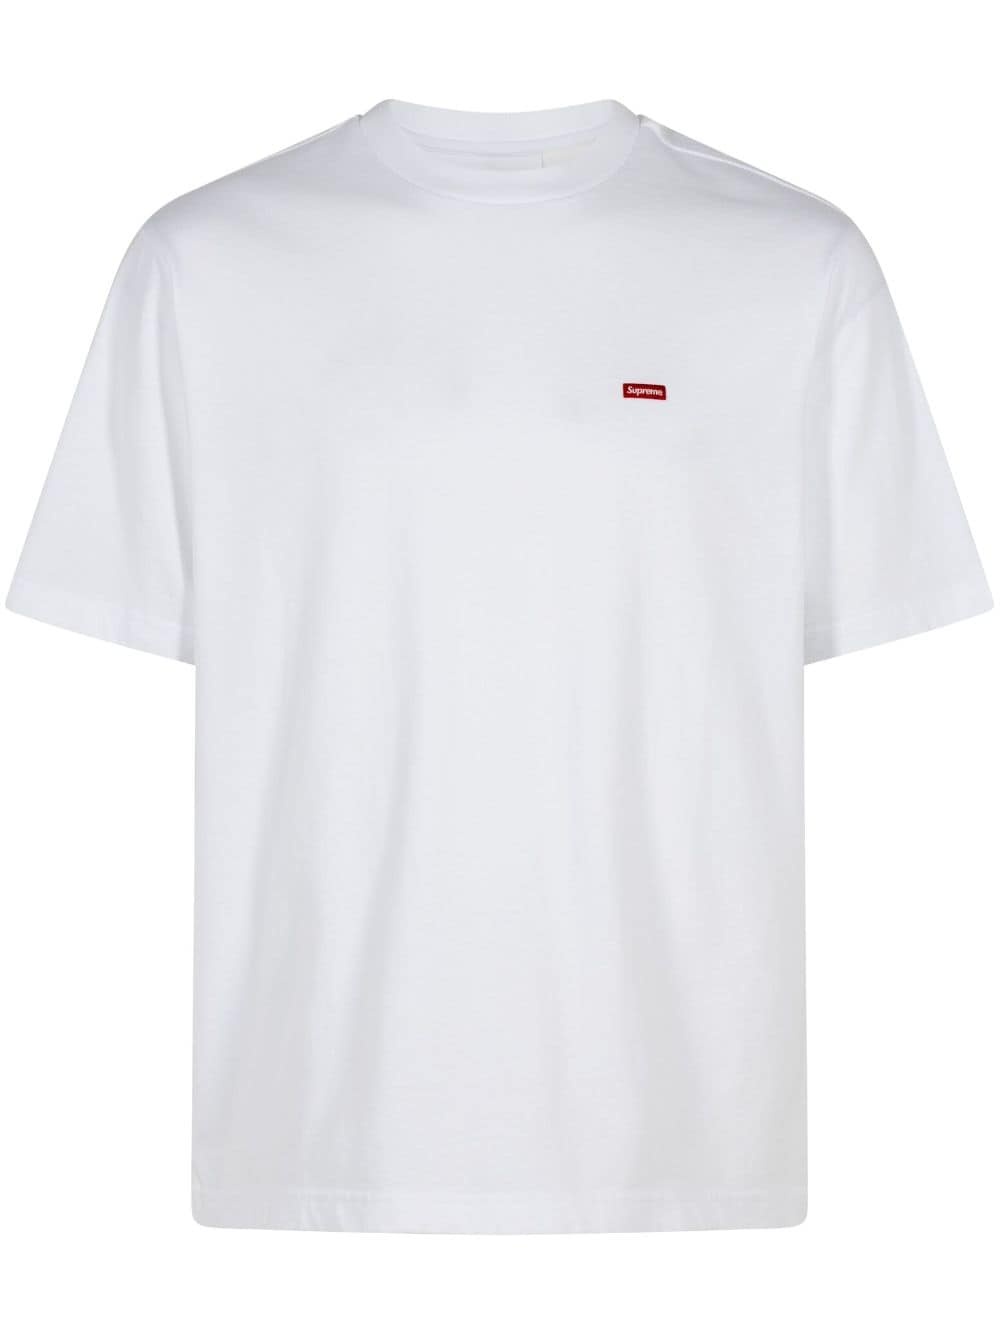 Small Box "White" T-shirt - 1